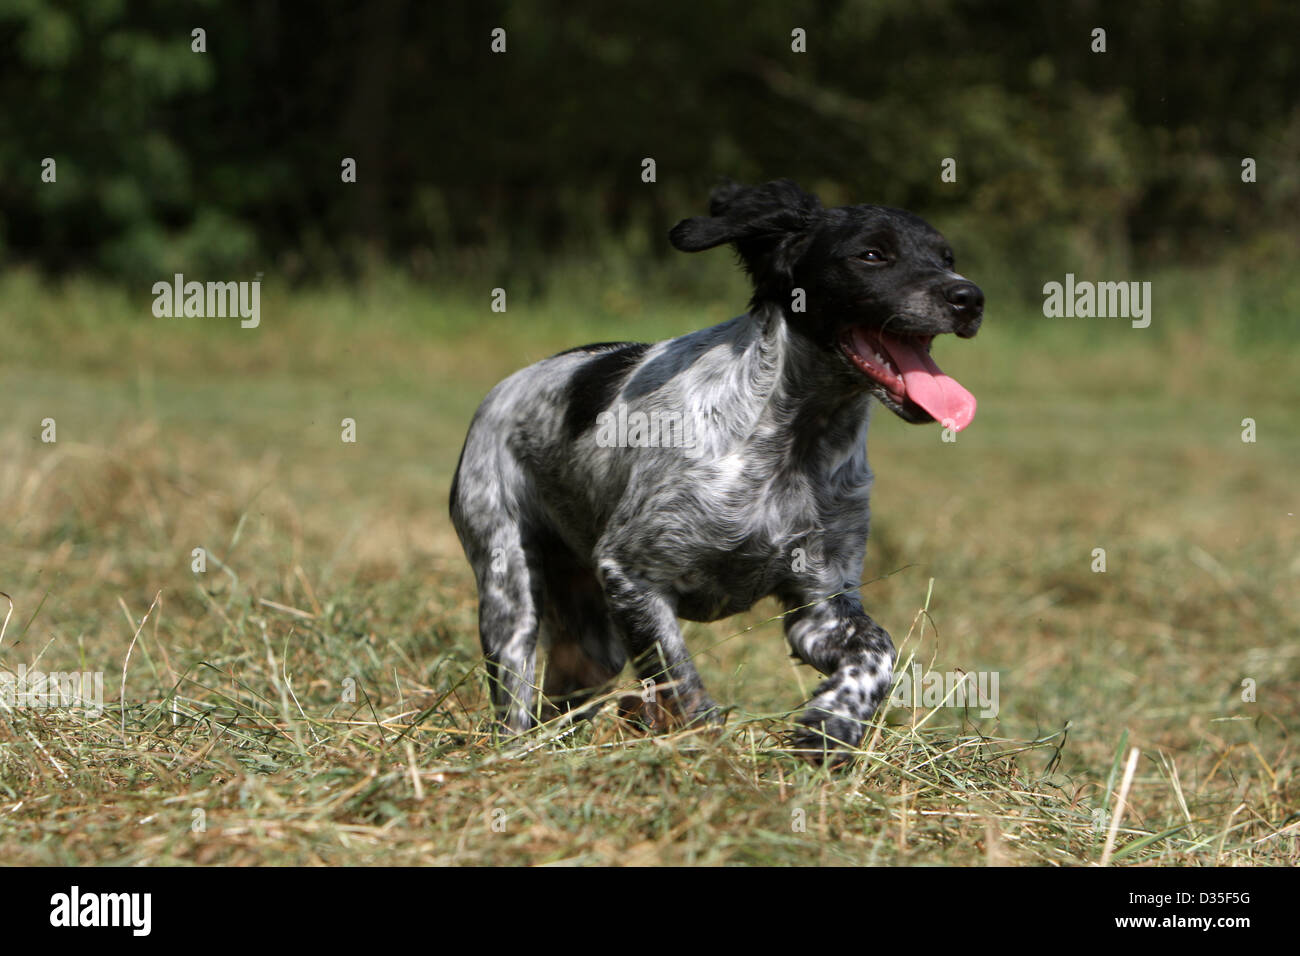 Dog Brittany Spaniel / Epagneul breton puppy Stock Photo - Alamy